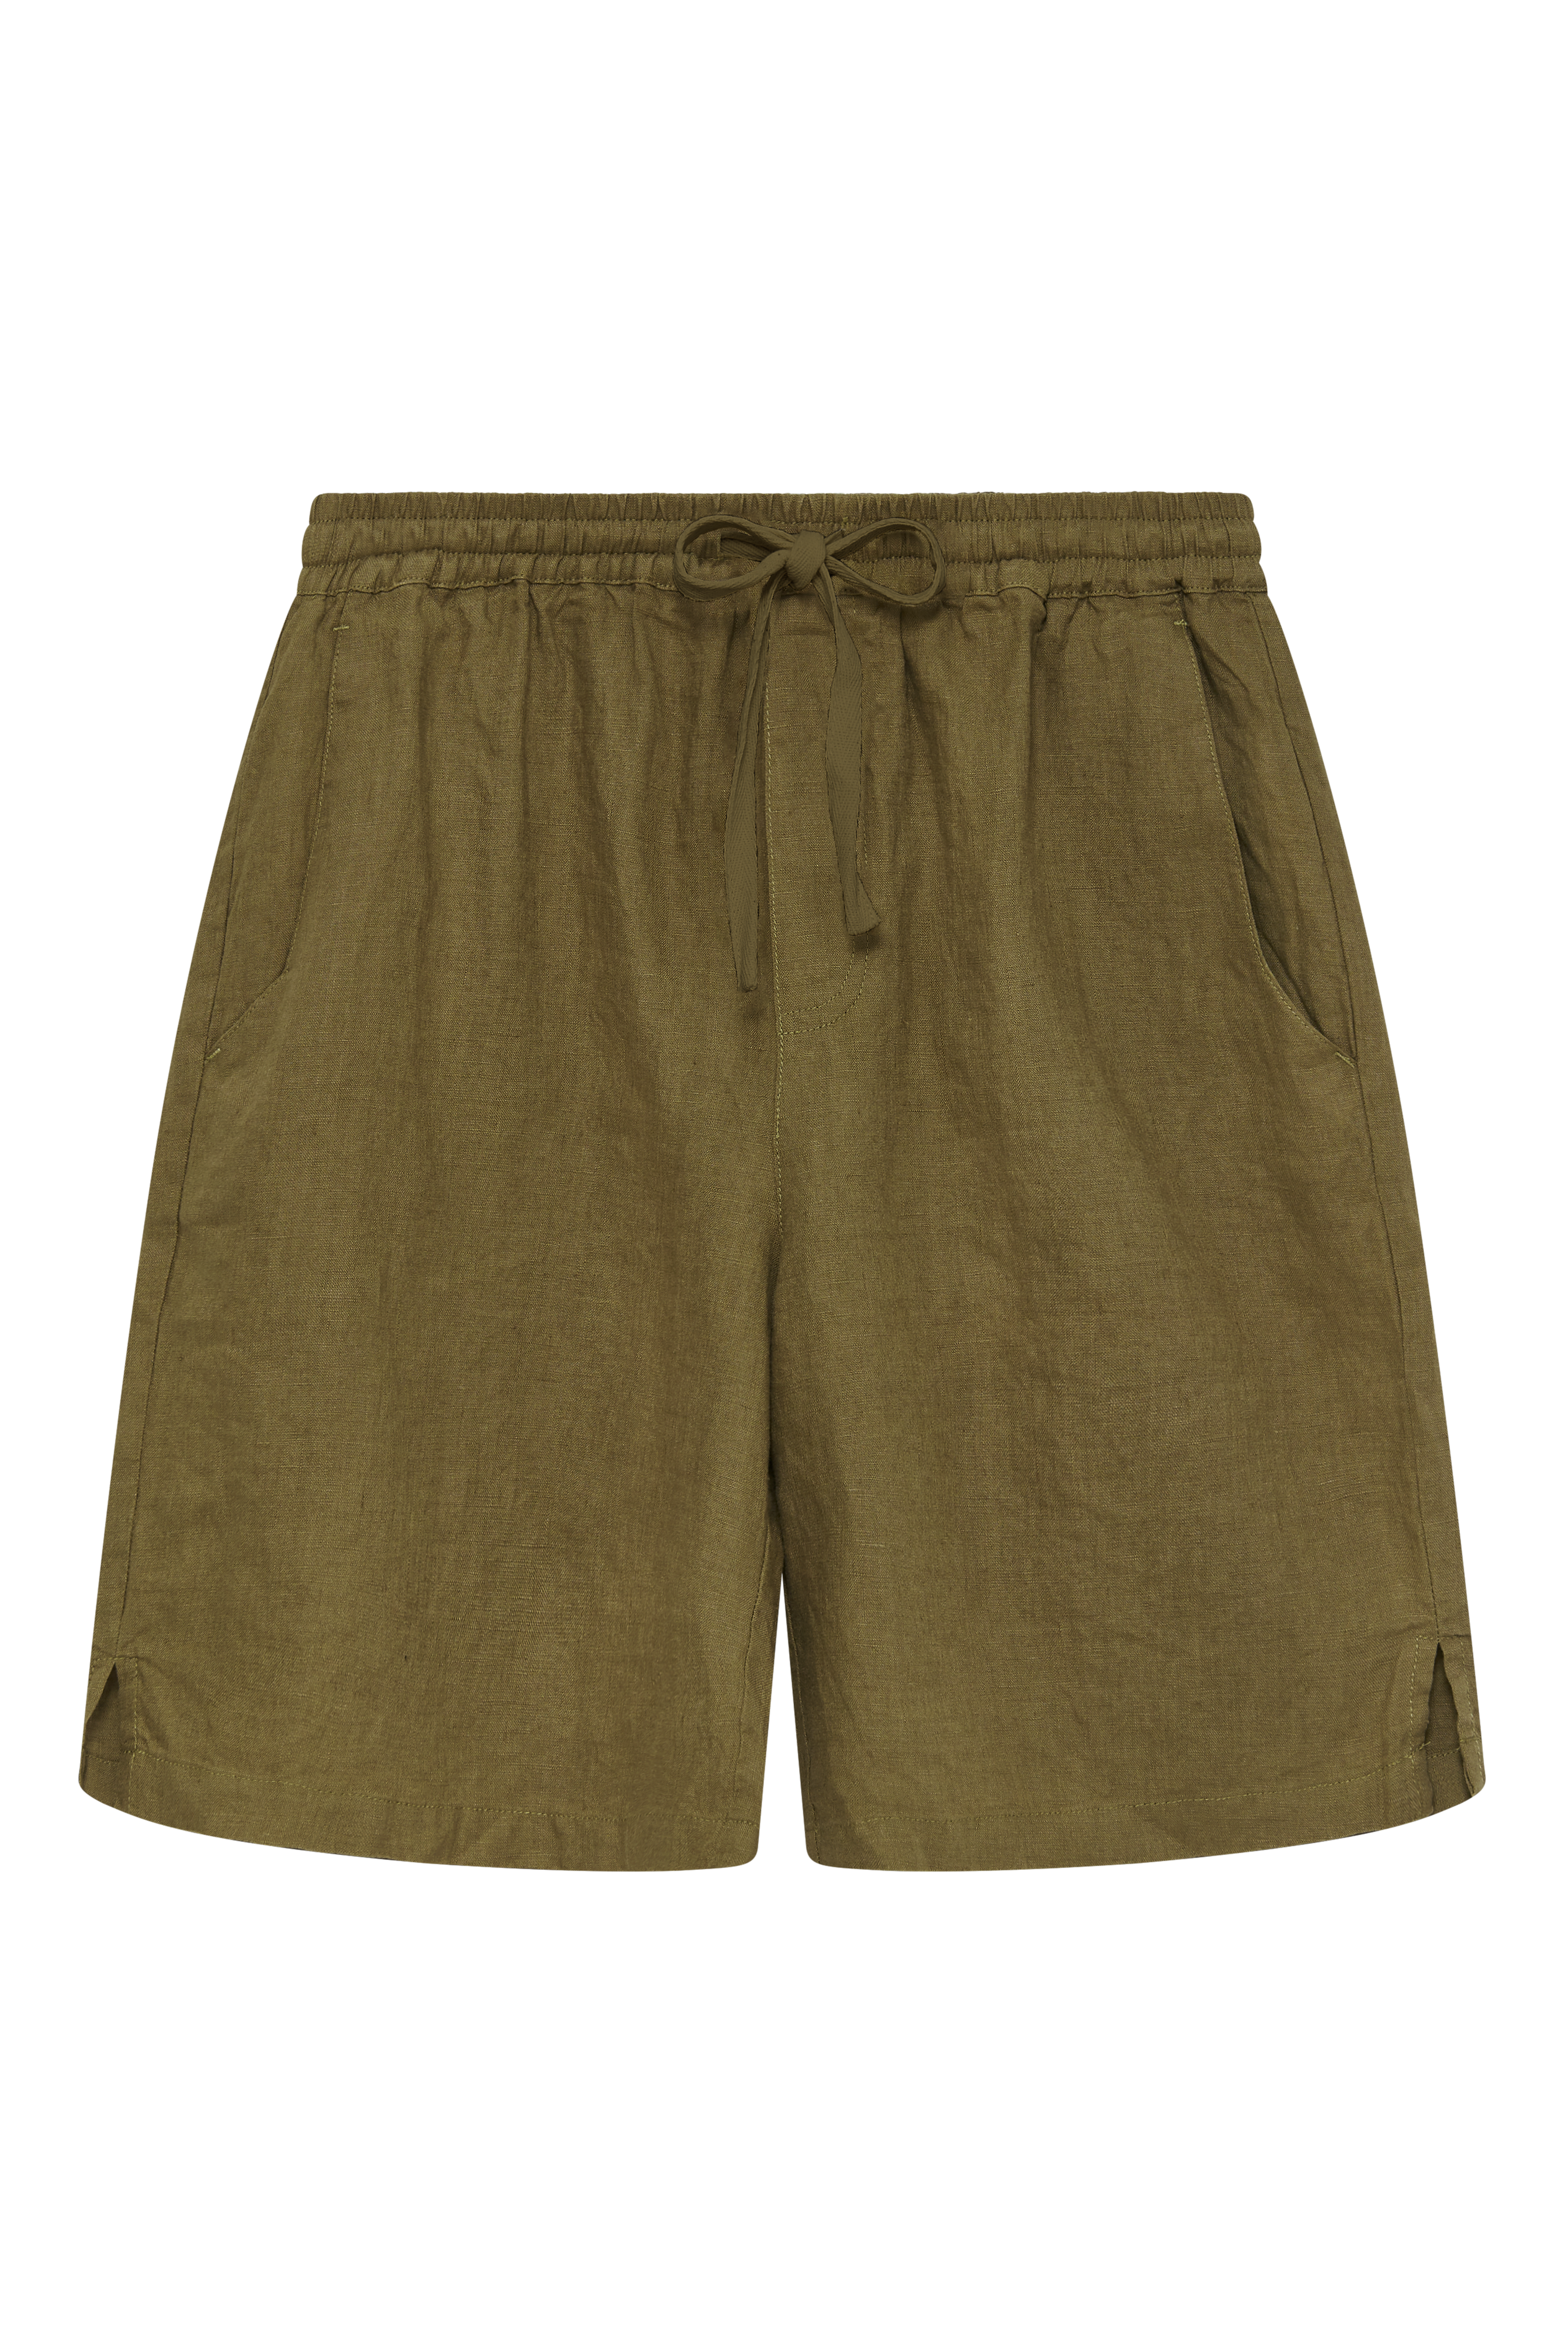 Komodo Men's Green Jerry - Khaki Linen Shorts